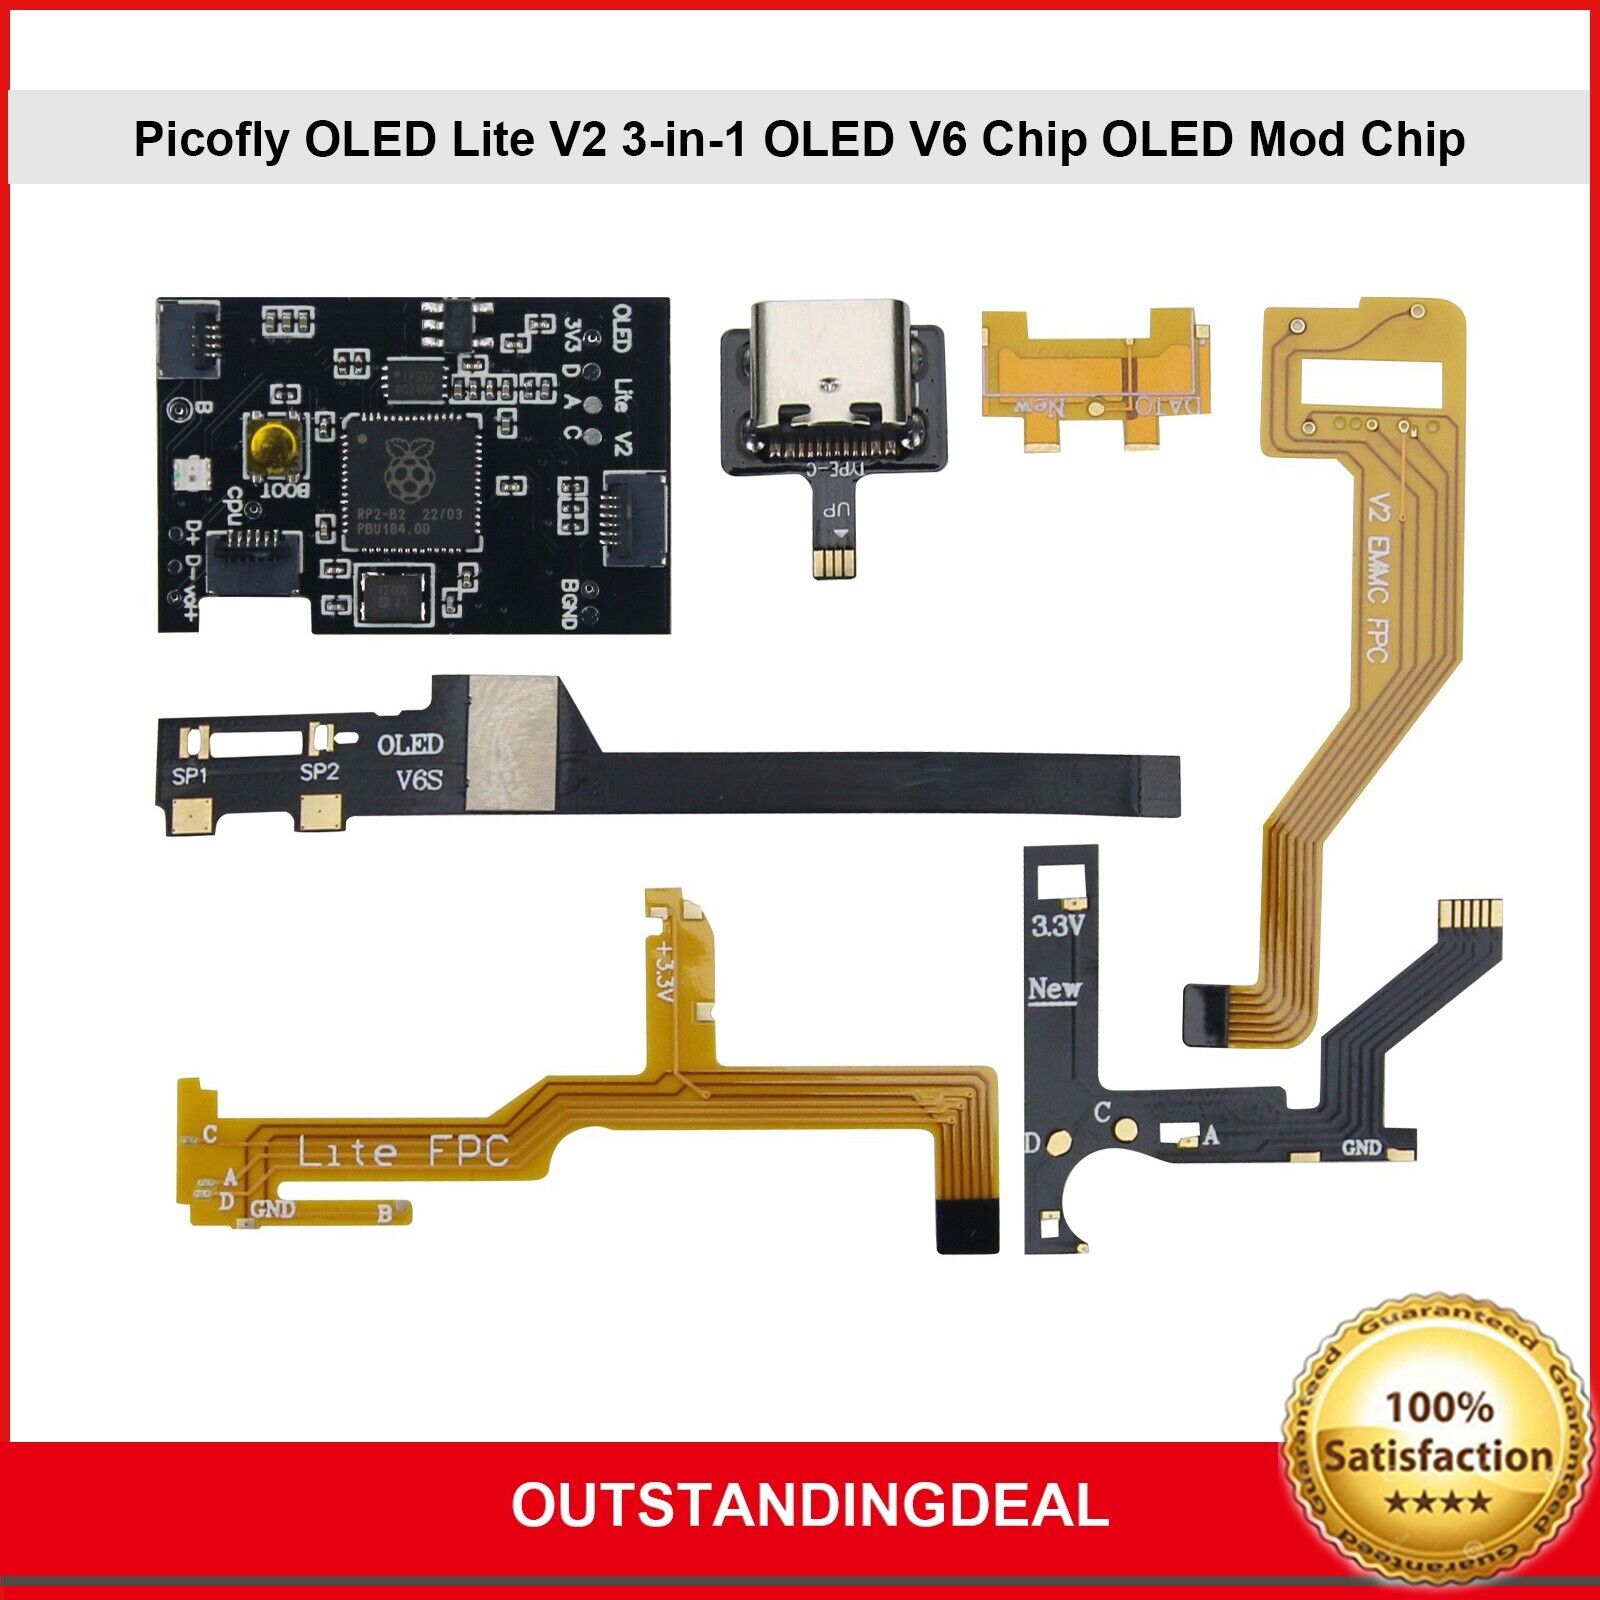 Picofly OLED Lite V2 3-in-1 OLED V6 Chip Suitable for Raspberry Pi NS DIY os67